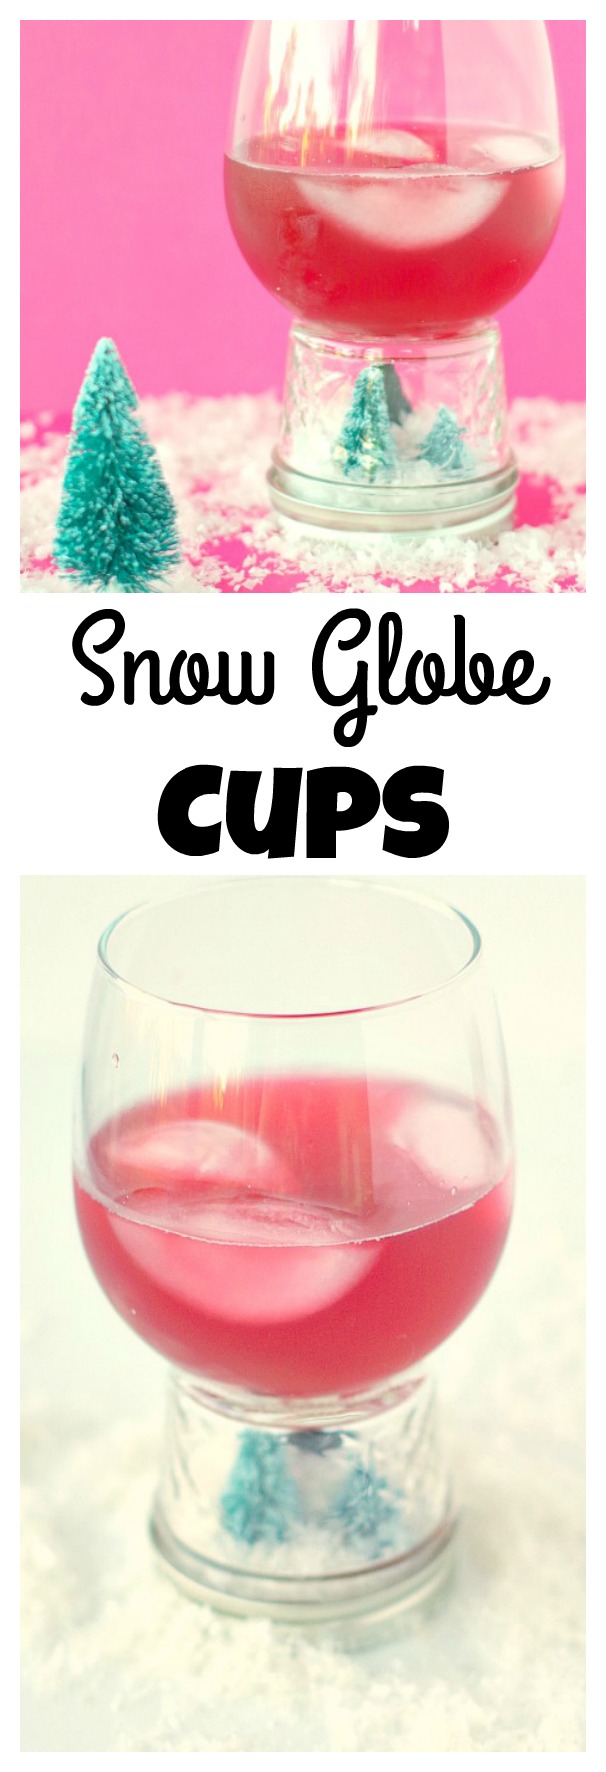 Snow Globe Cups